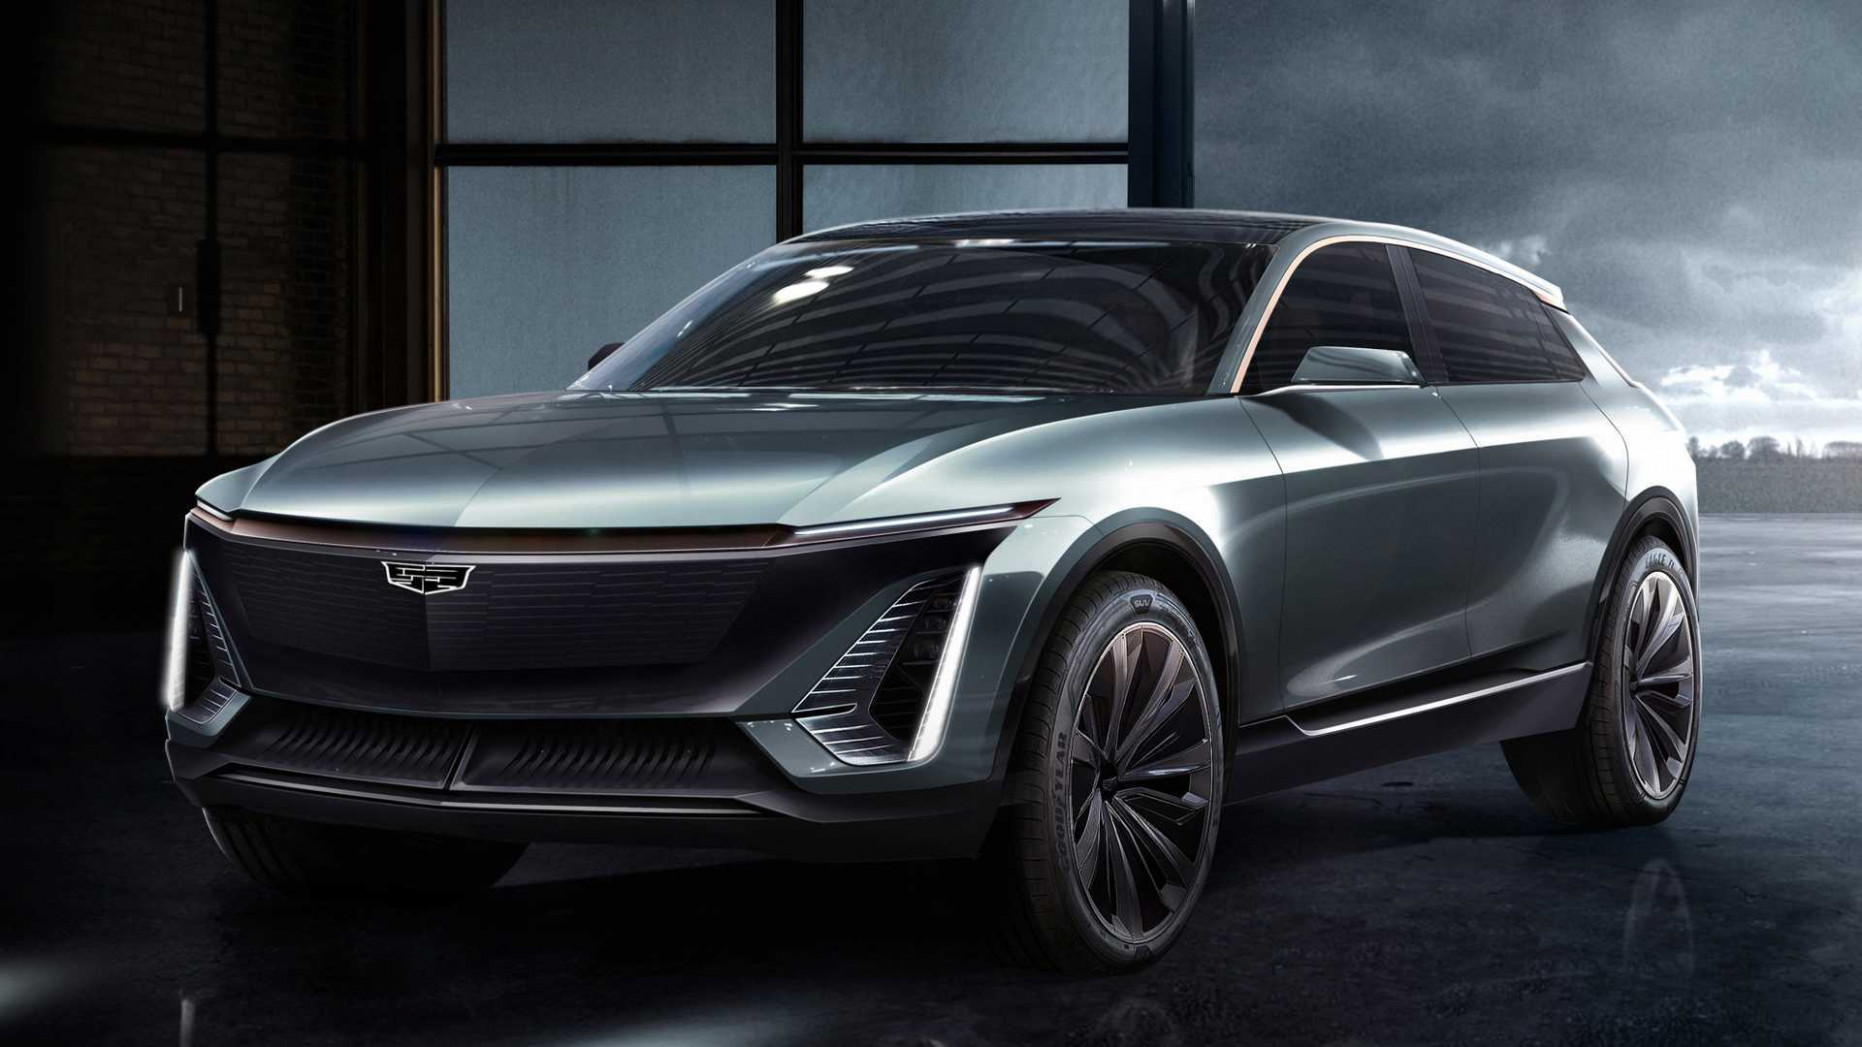 Exterior and Interior Cadillac Hybrid Suv 2022